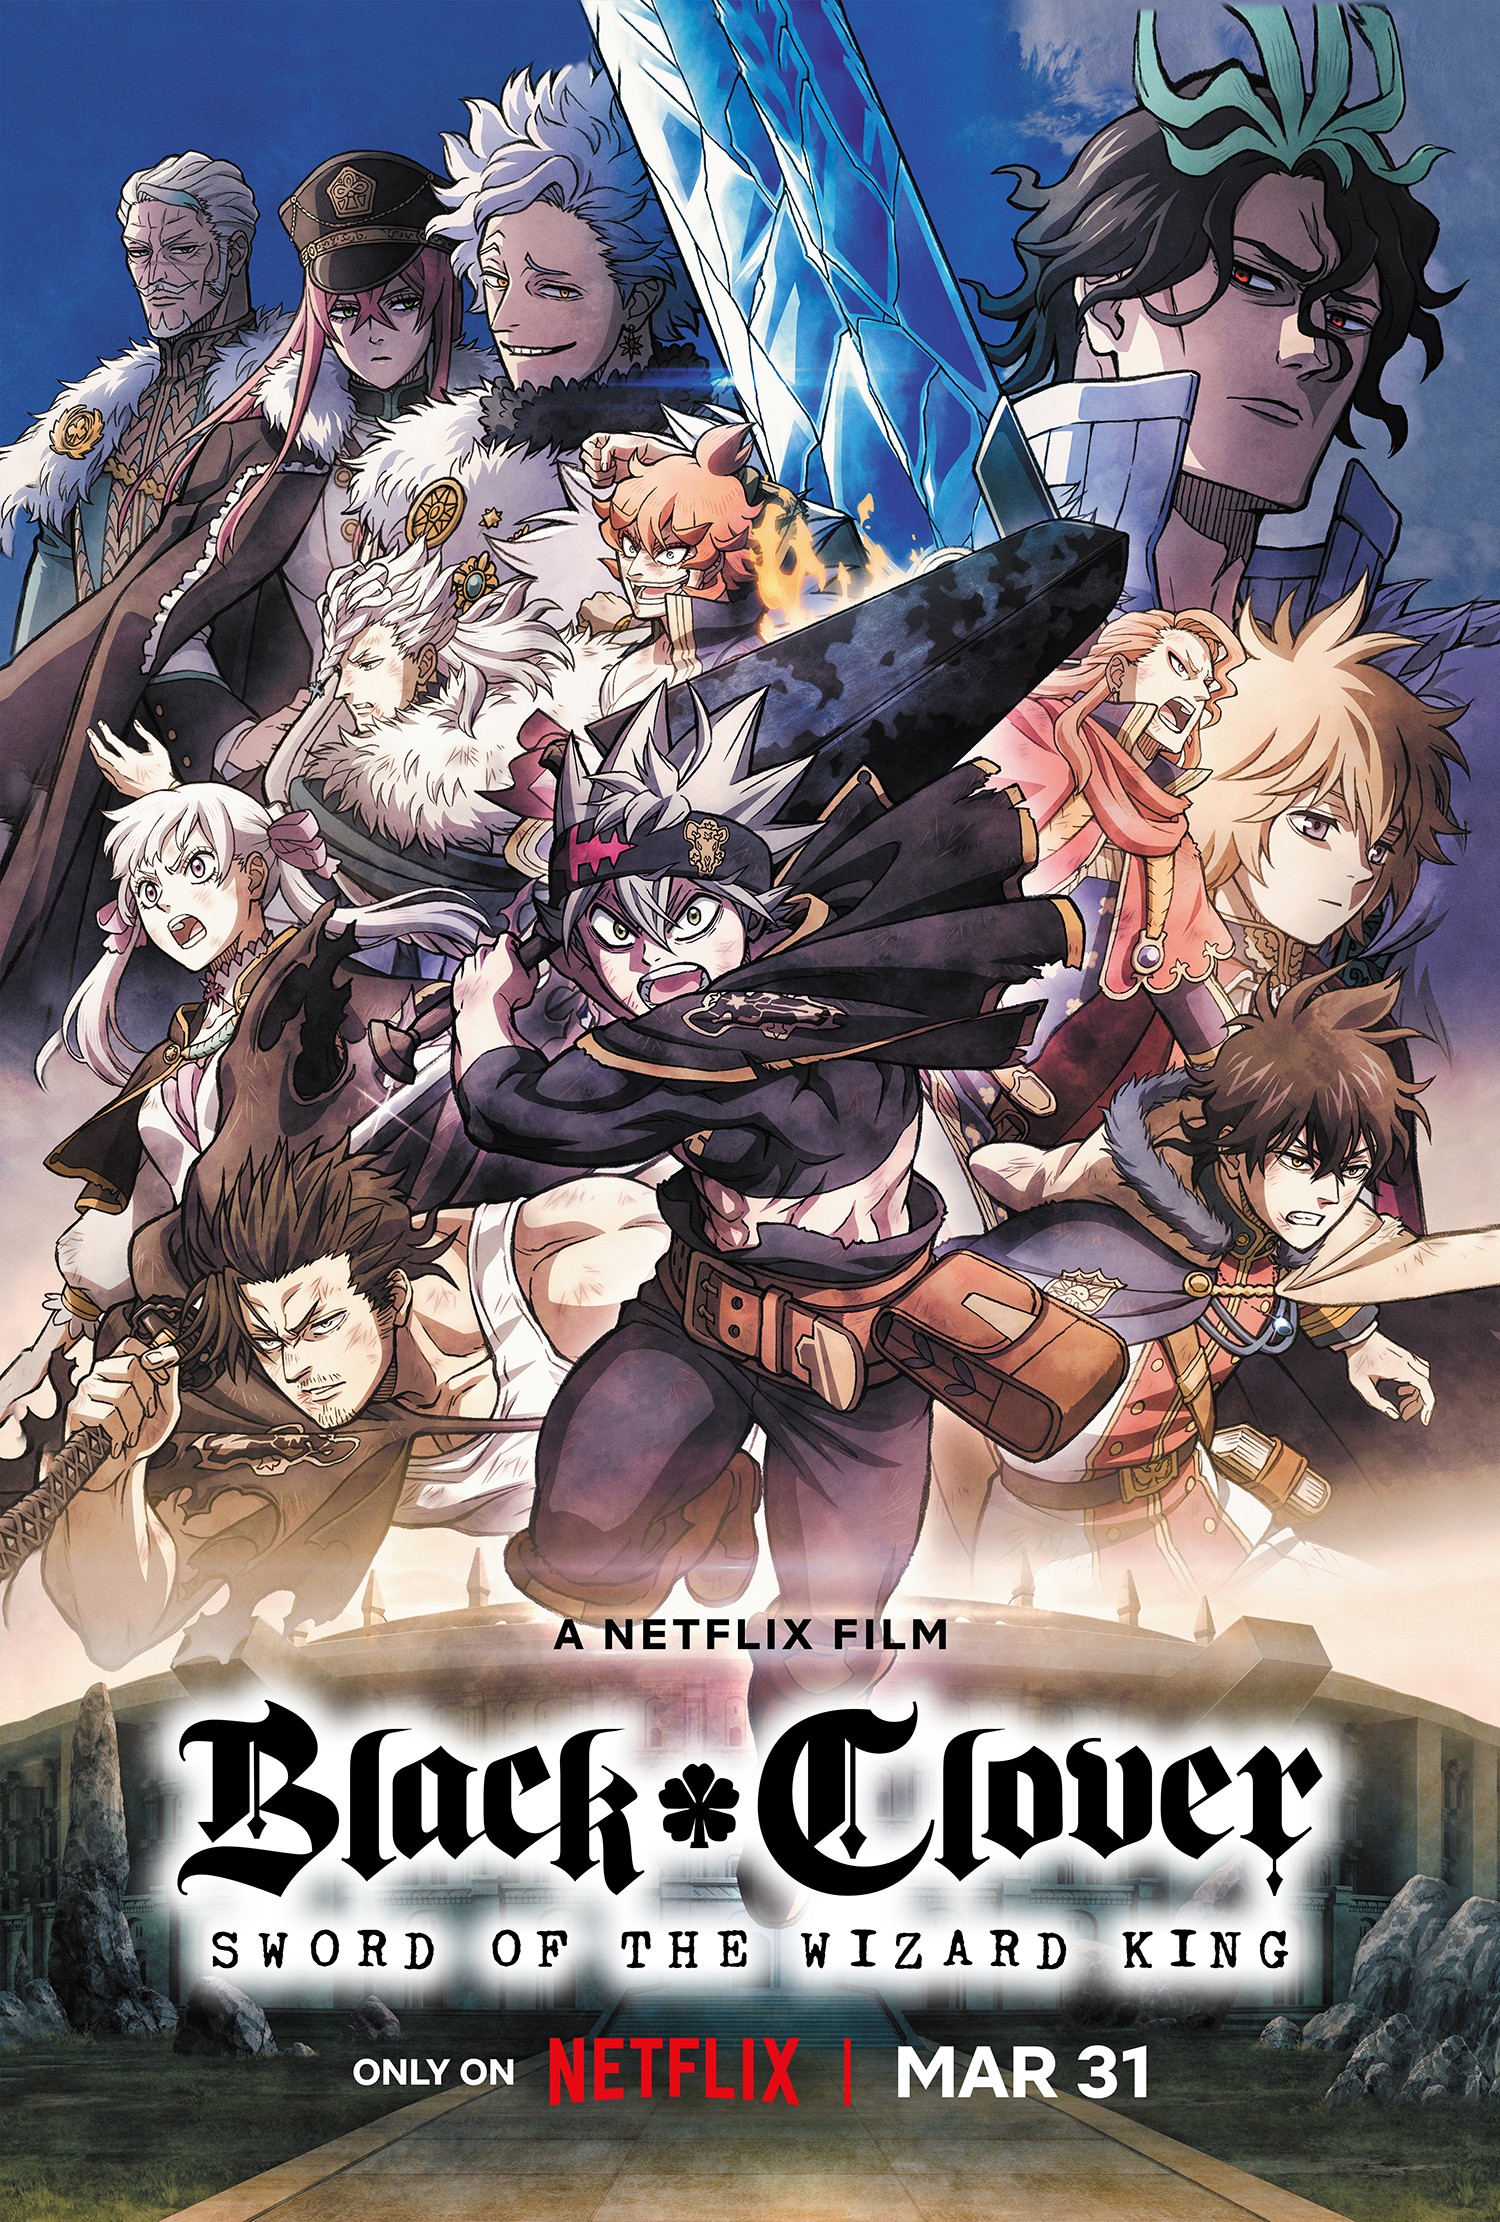 Let's Review: Black Clover